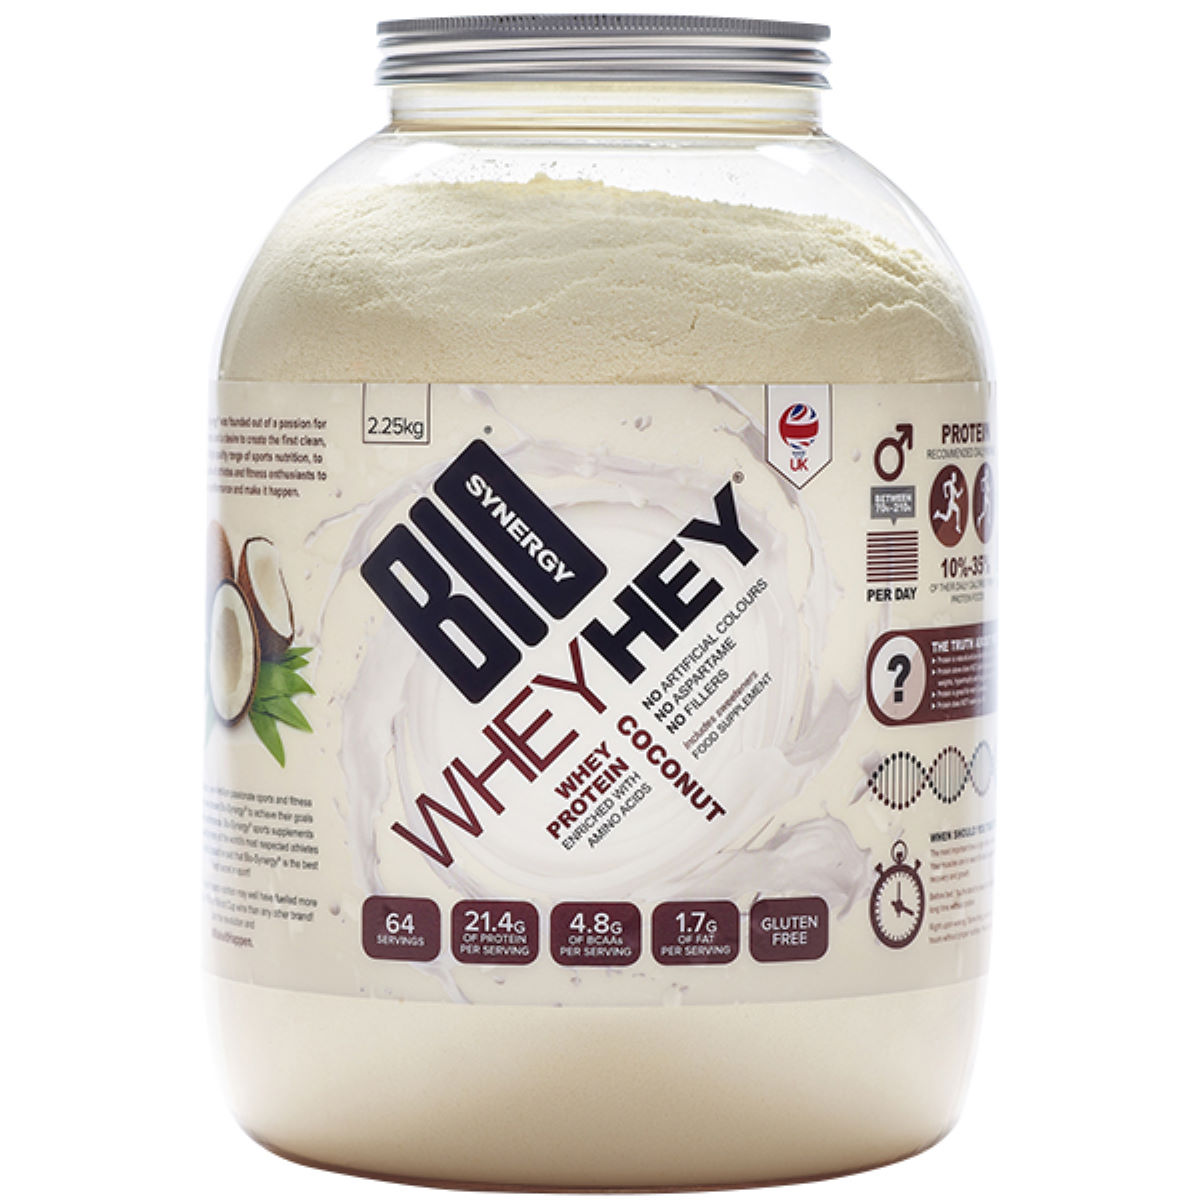 Bio-Synergy Whey Hey Coconut Protein Powder (2.25kg) - Proteína de suero de leche